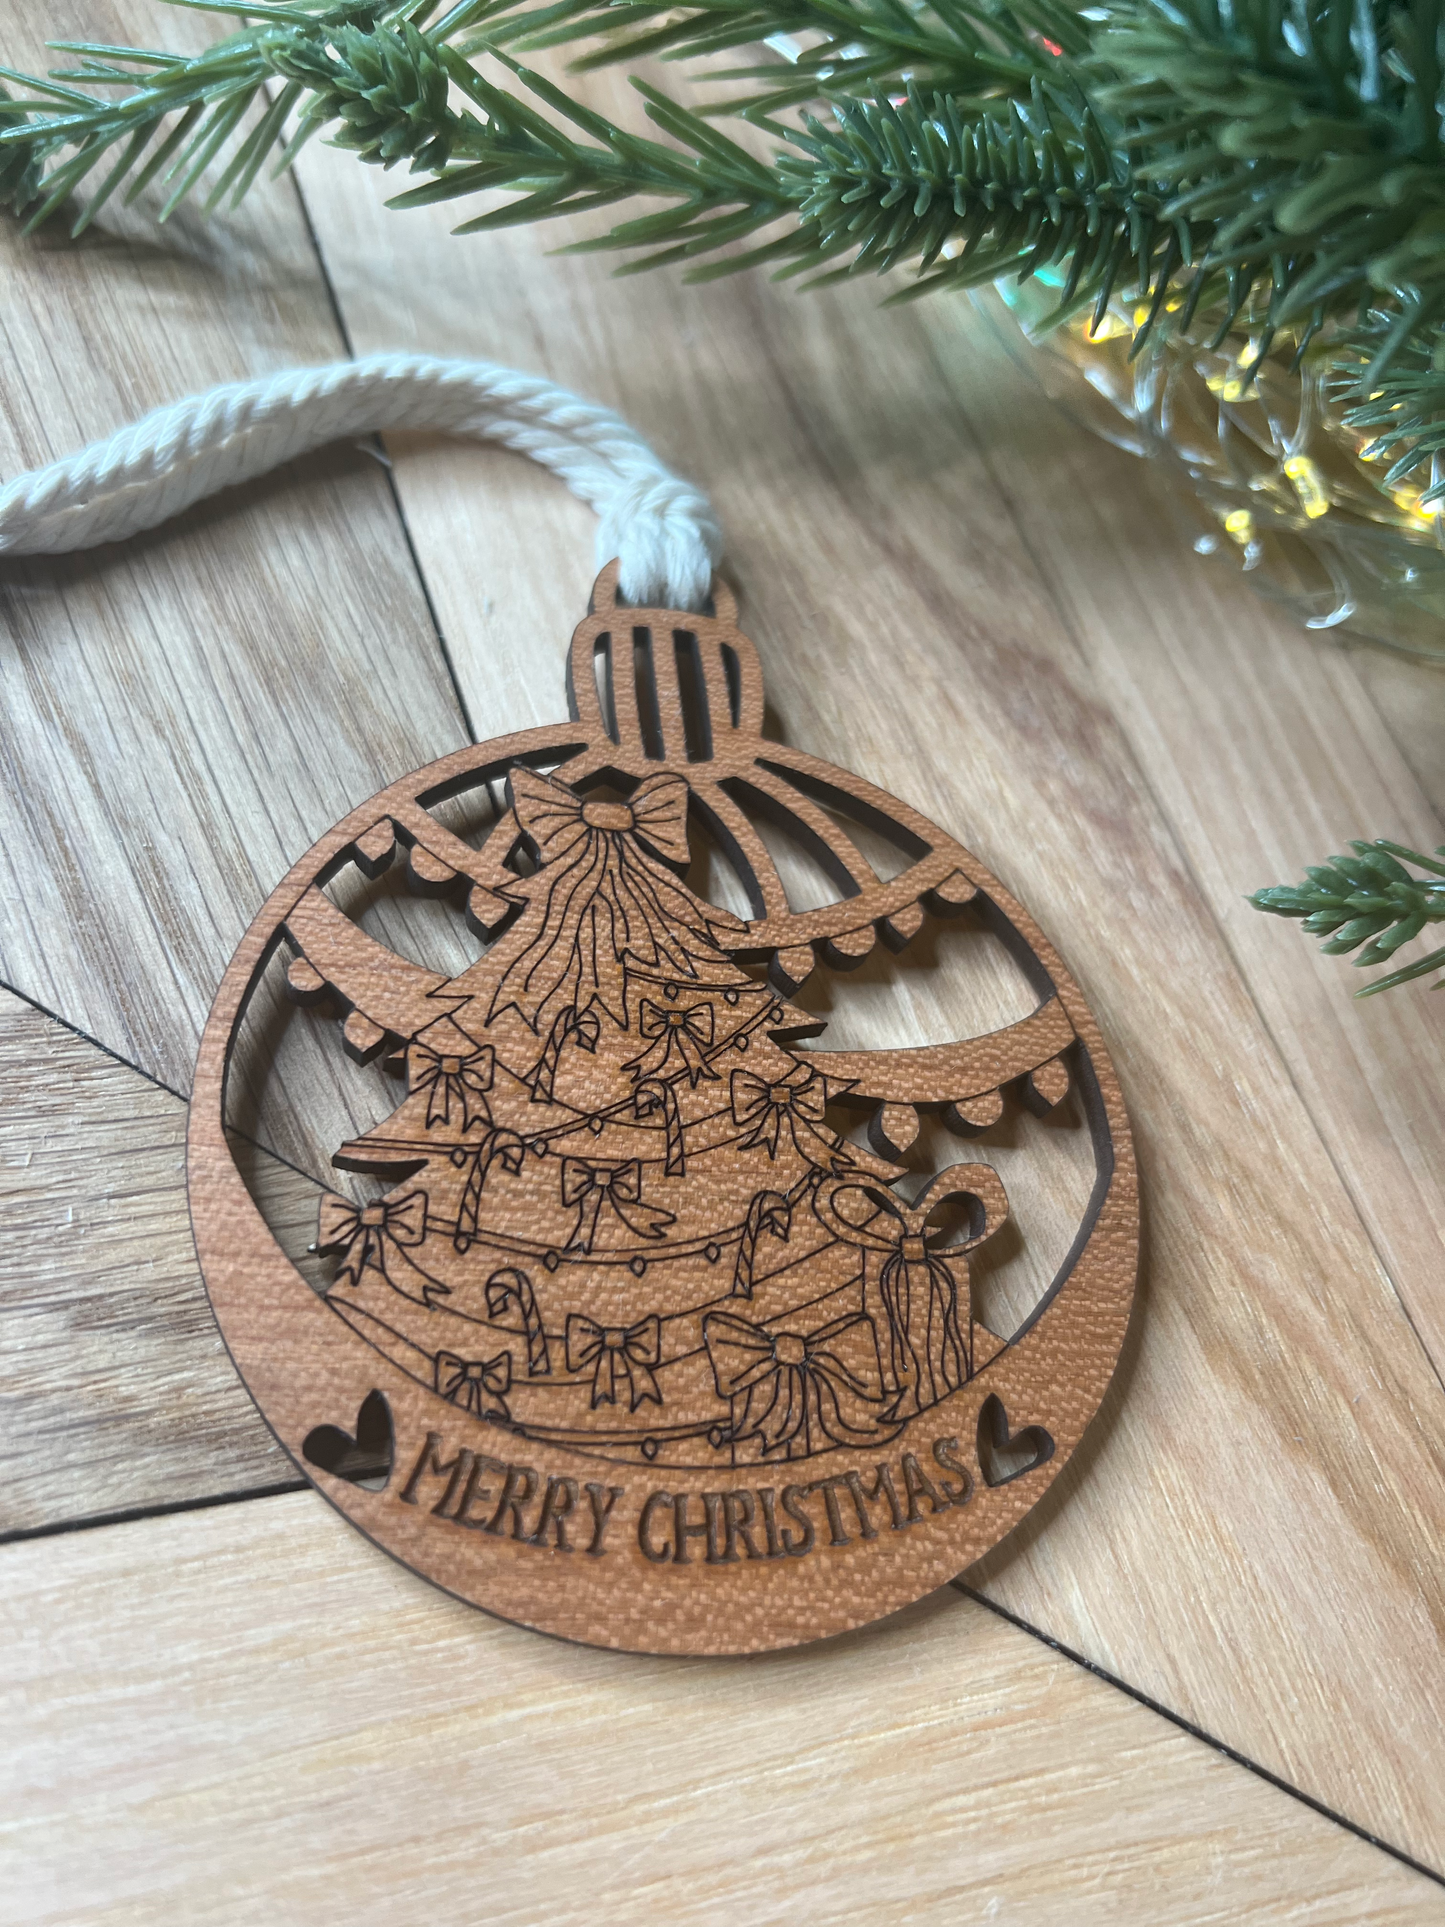 Merry Christmas Tree Ornament